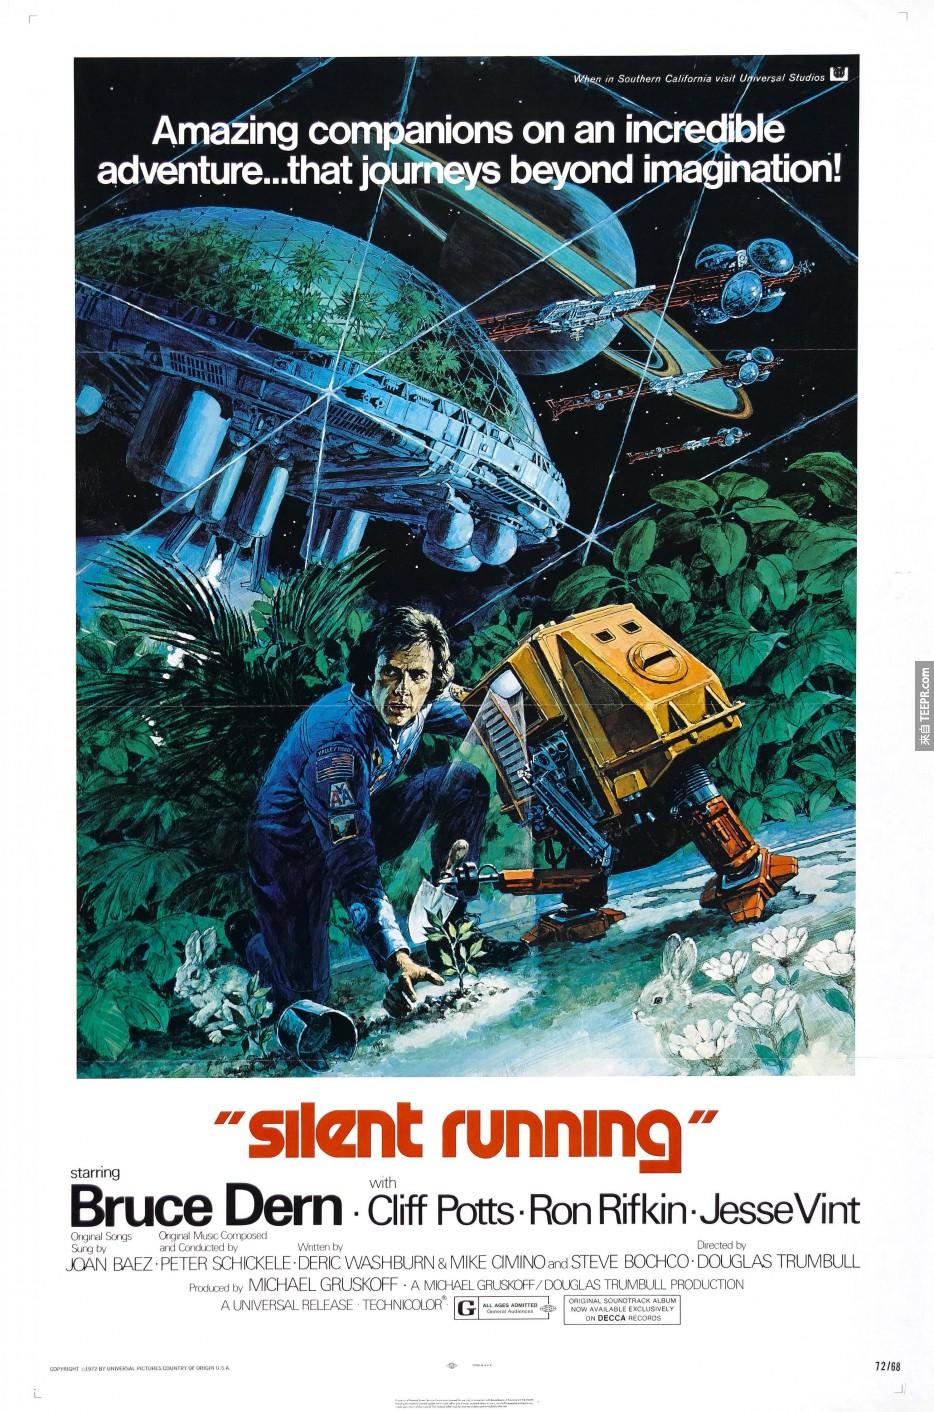 Bahnhof的董事長Jon Karlung說，這些植物和瀑布造景的靈感來源，是來自於1972年Bruce Dern的科幻片「Silent Running」。